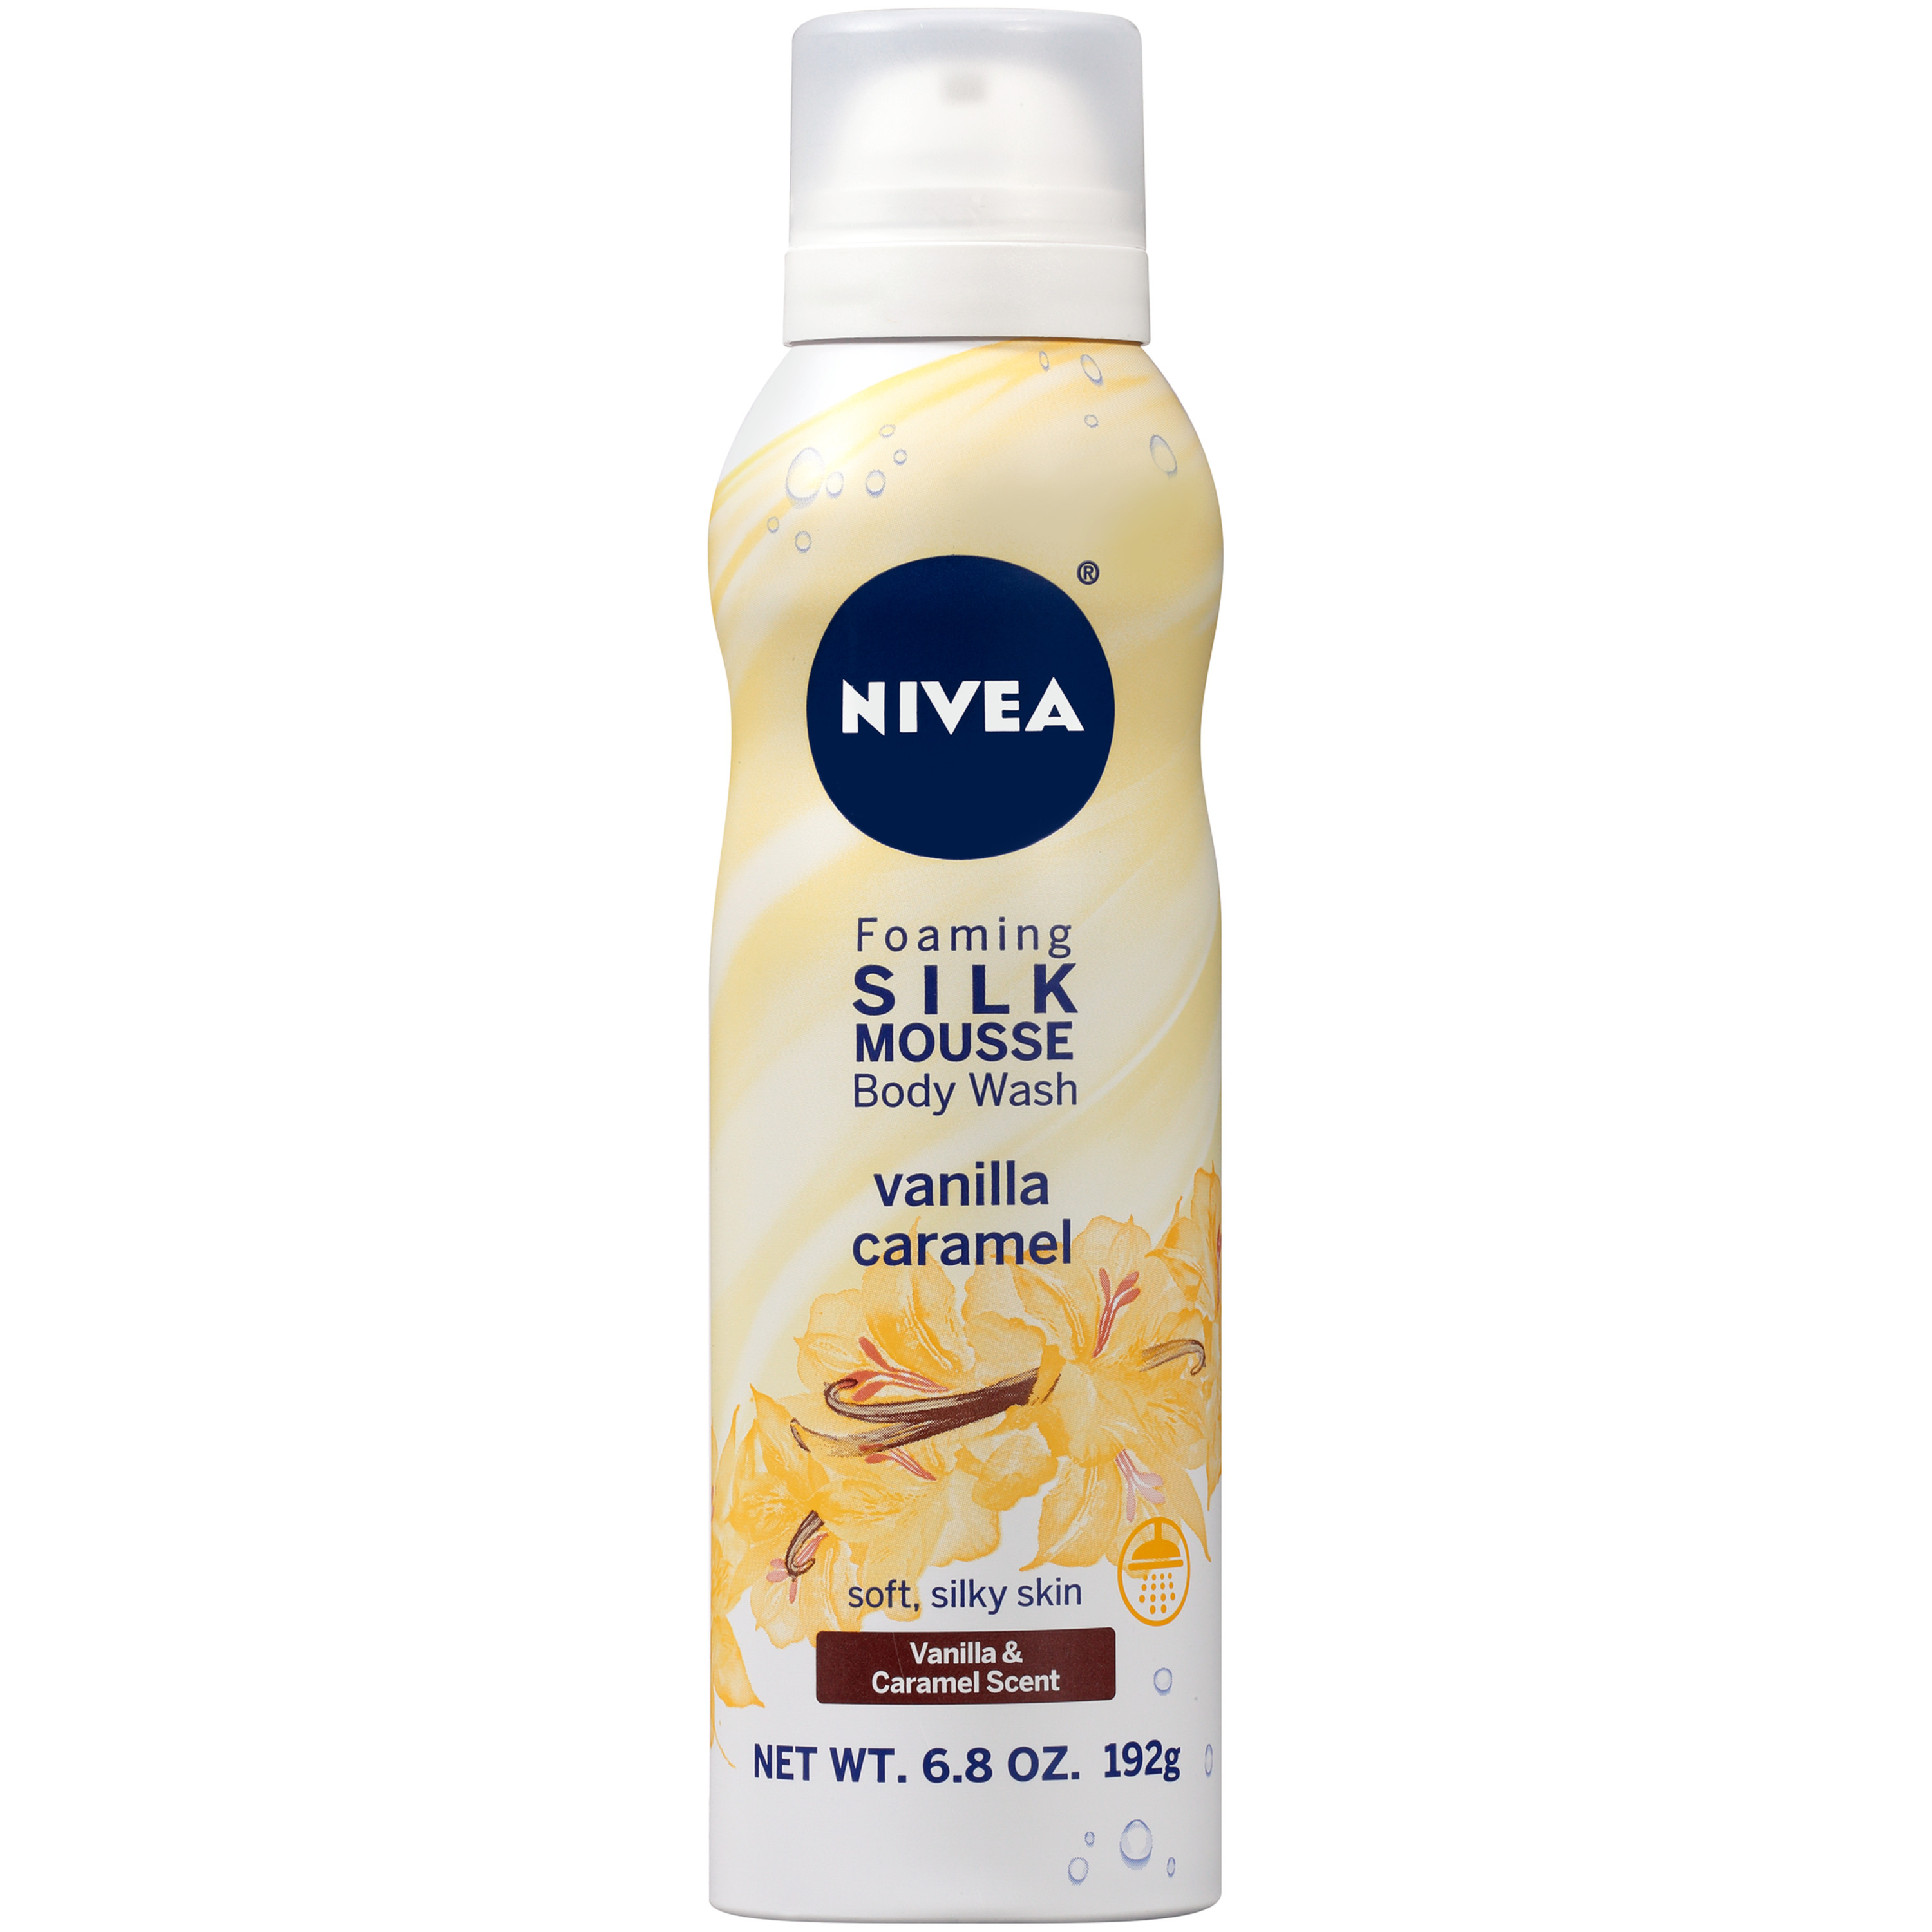 NIVEA Vanilla Caramel Foaming Silk Mousse Body Wash, 6.8 oz. Pump Bottle - image 1 of 4